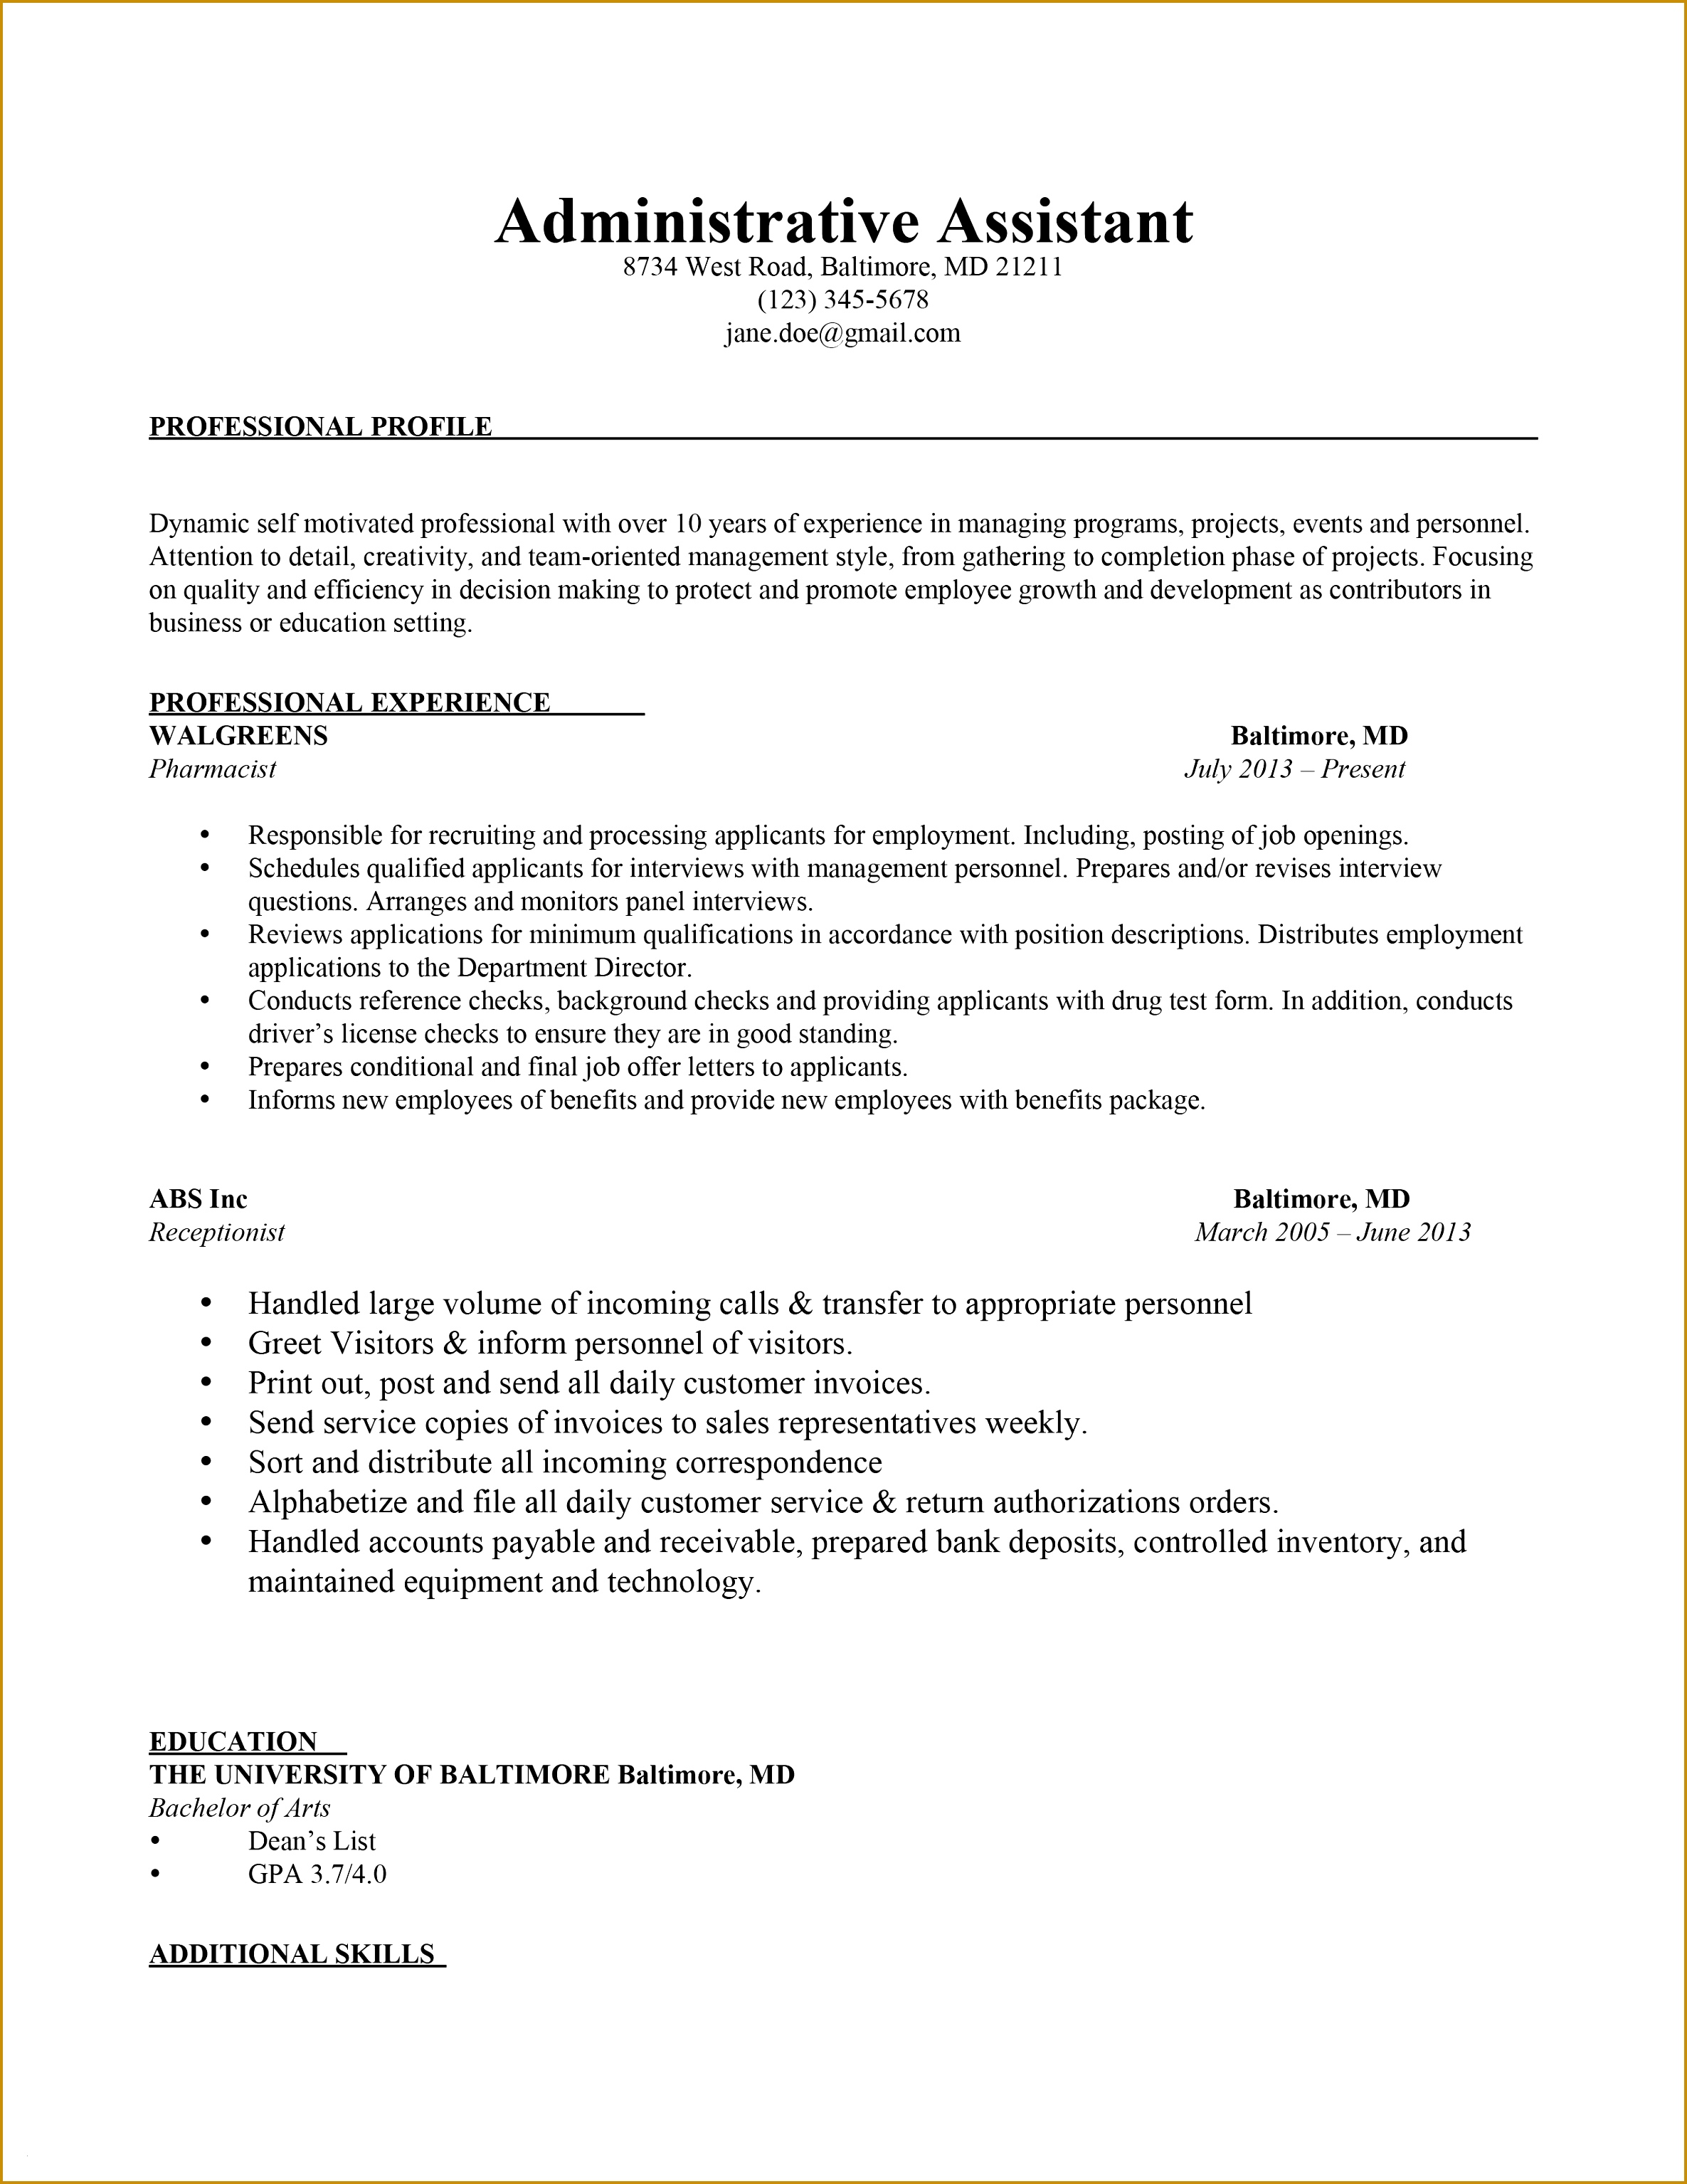 Administrative assistant Job Resume Inspirational Elegant Example Resume Cover Letter Lovely Od Specialist Sample 30692371